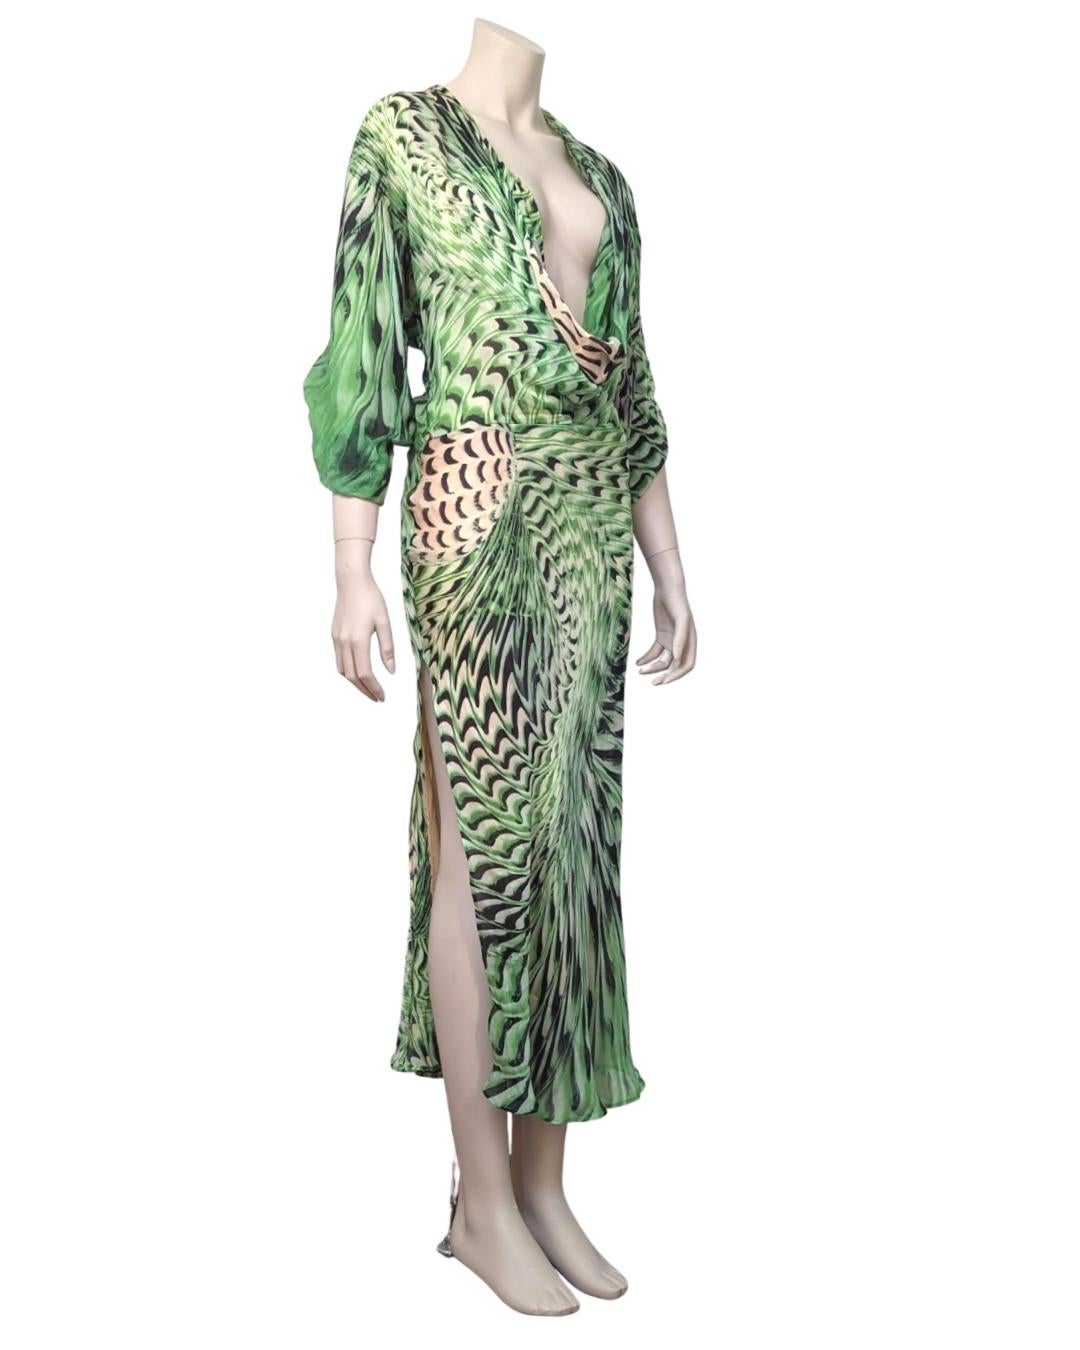 Roberto Cavalli S/S 2001 Runway Silk Dress For Sale 2